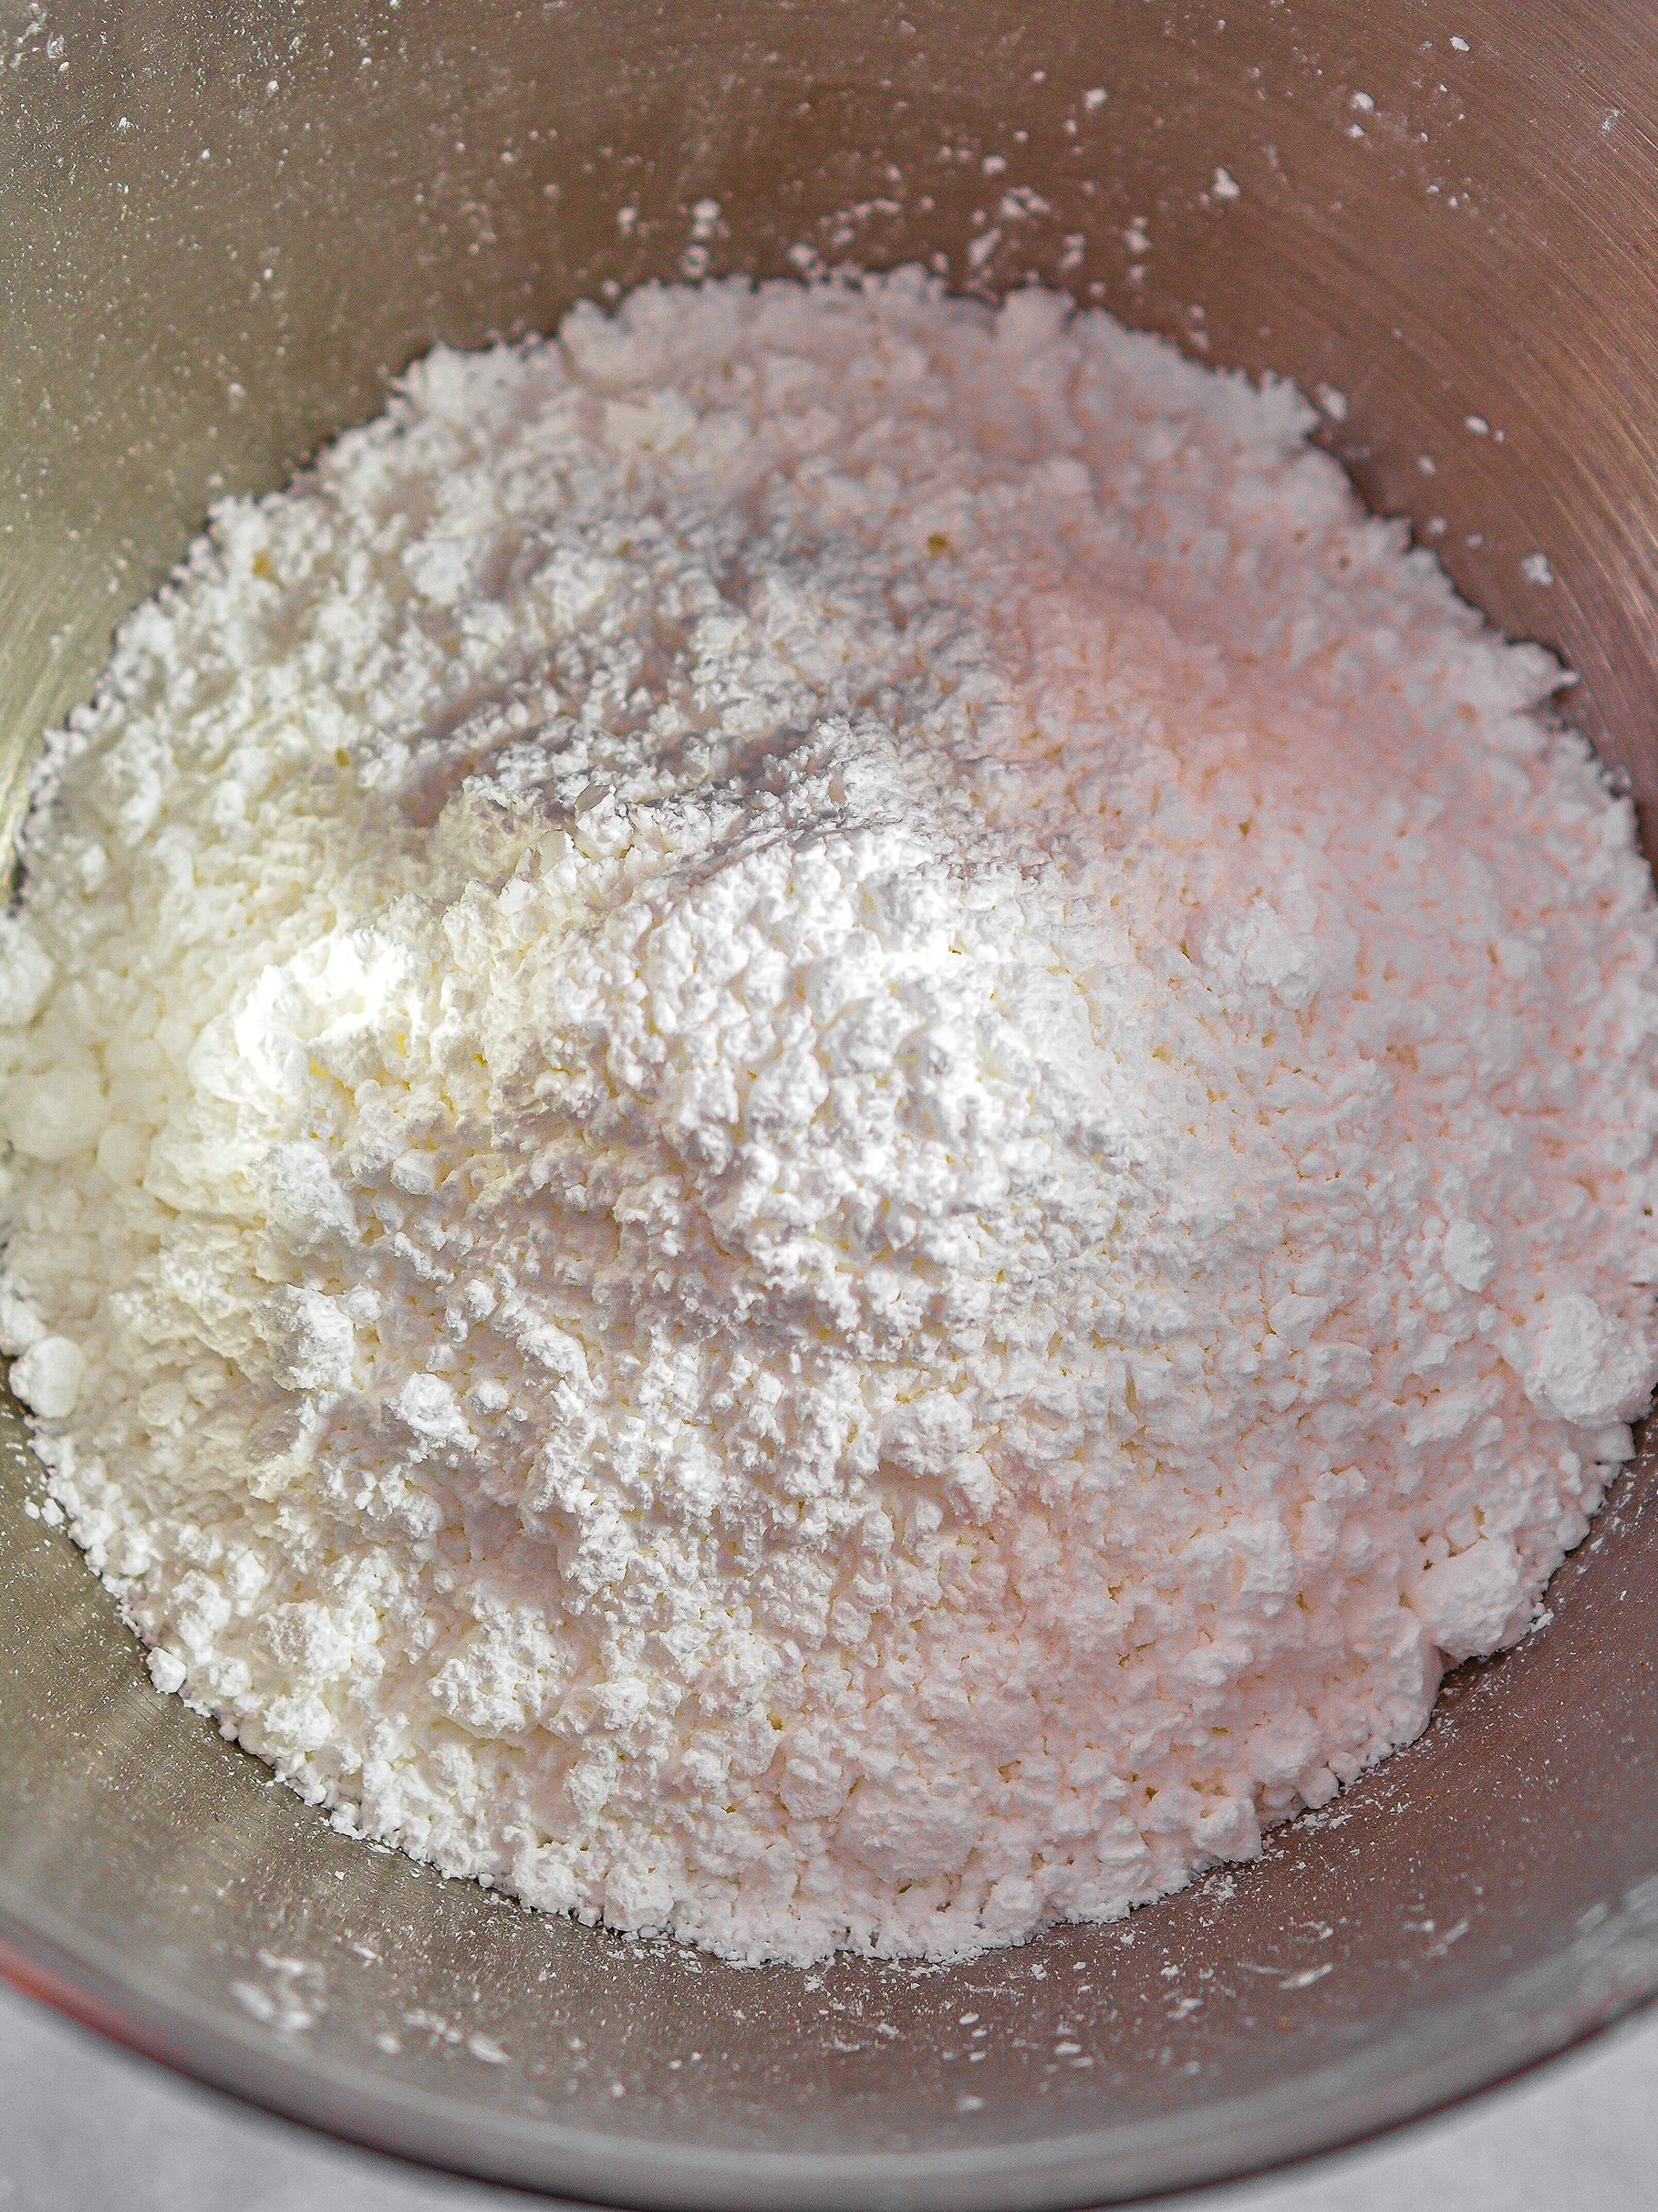 Adding the powdered sugar.